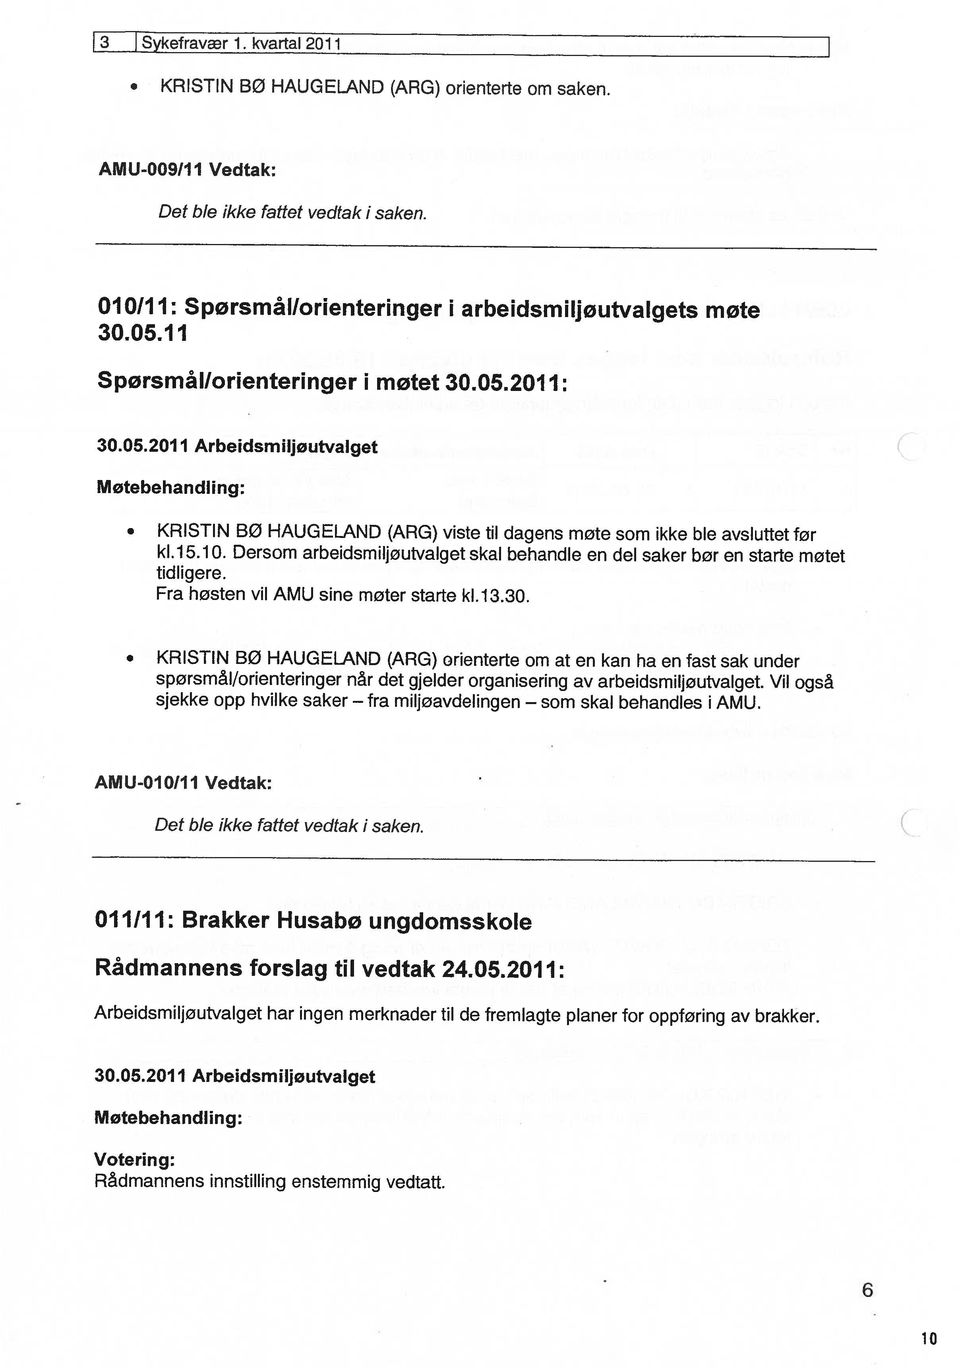 Rådmannens forslag til vedtak 24.05.2011: 011111 Brakker Husabø ungdomsskole Det ble ikke fattet vedtak i saken AMU-010I11 Vedtak sjekke opp hvilke saker fra miljøavdelingen som skal behandles i AMU.